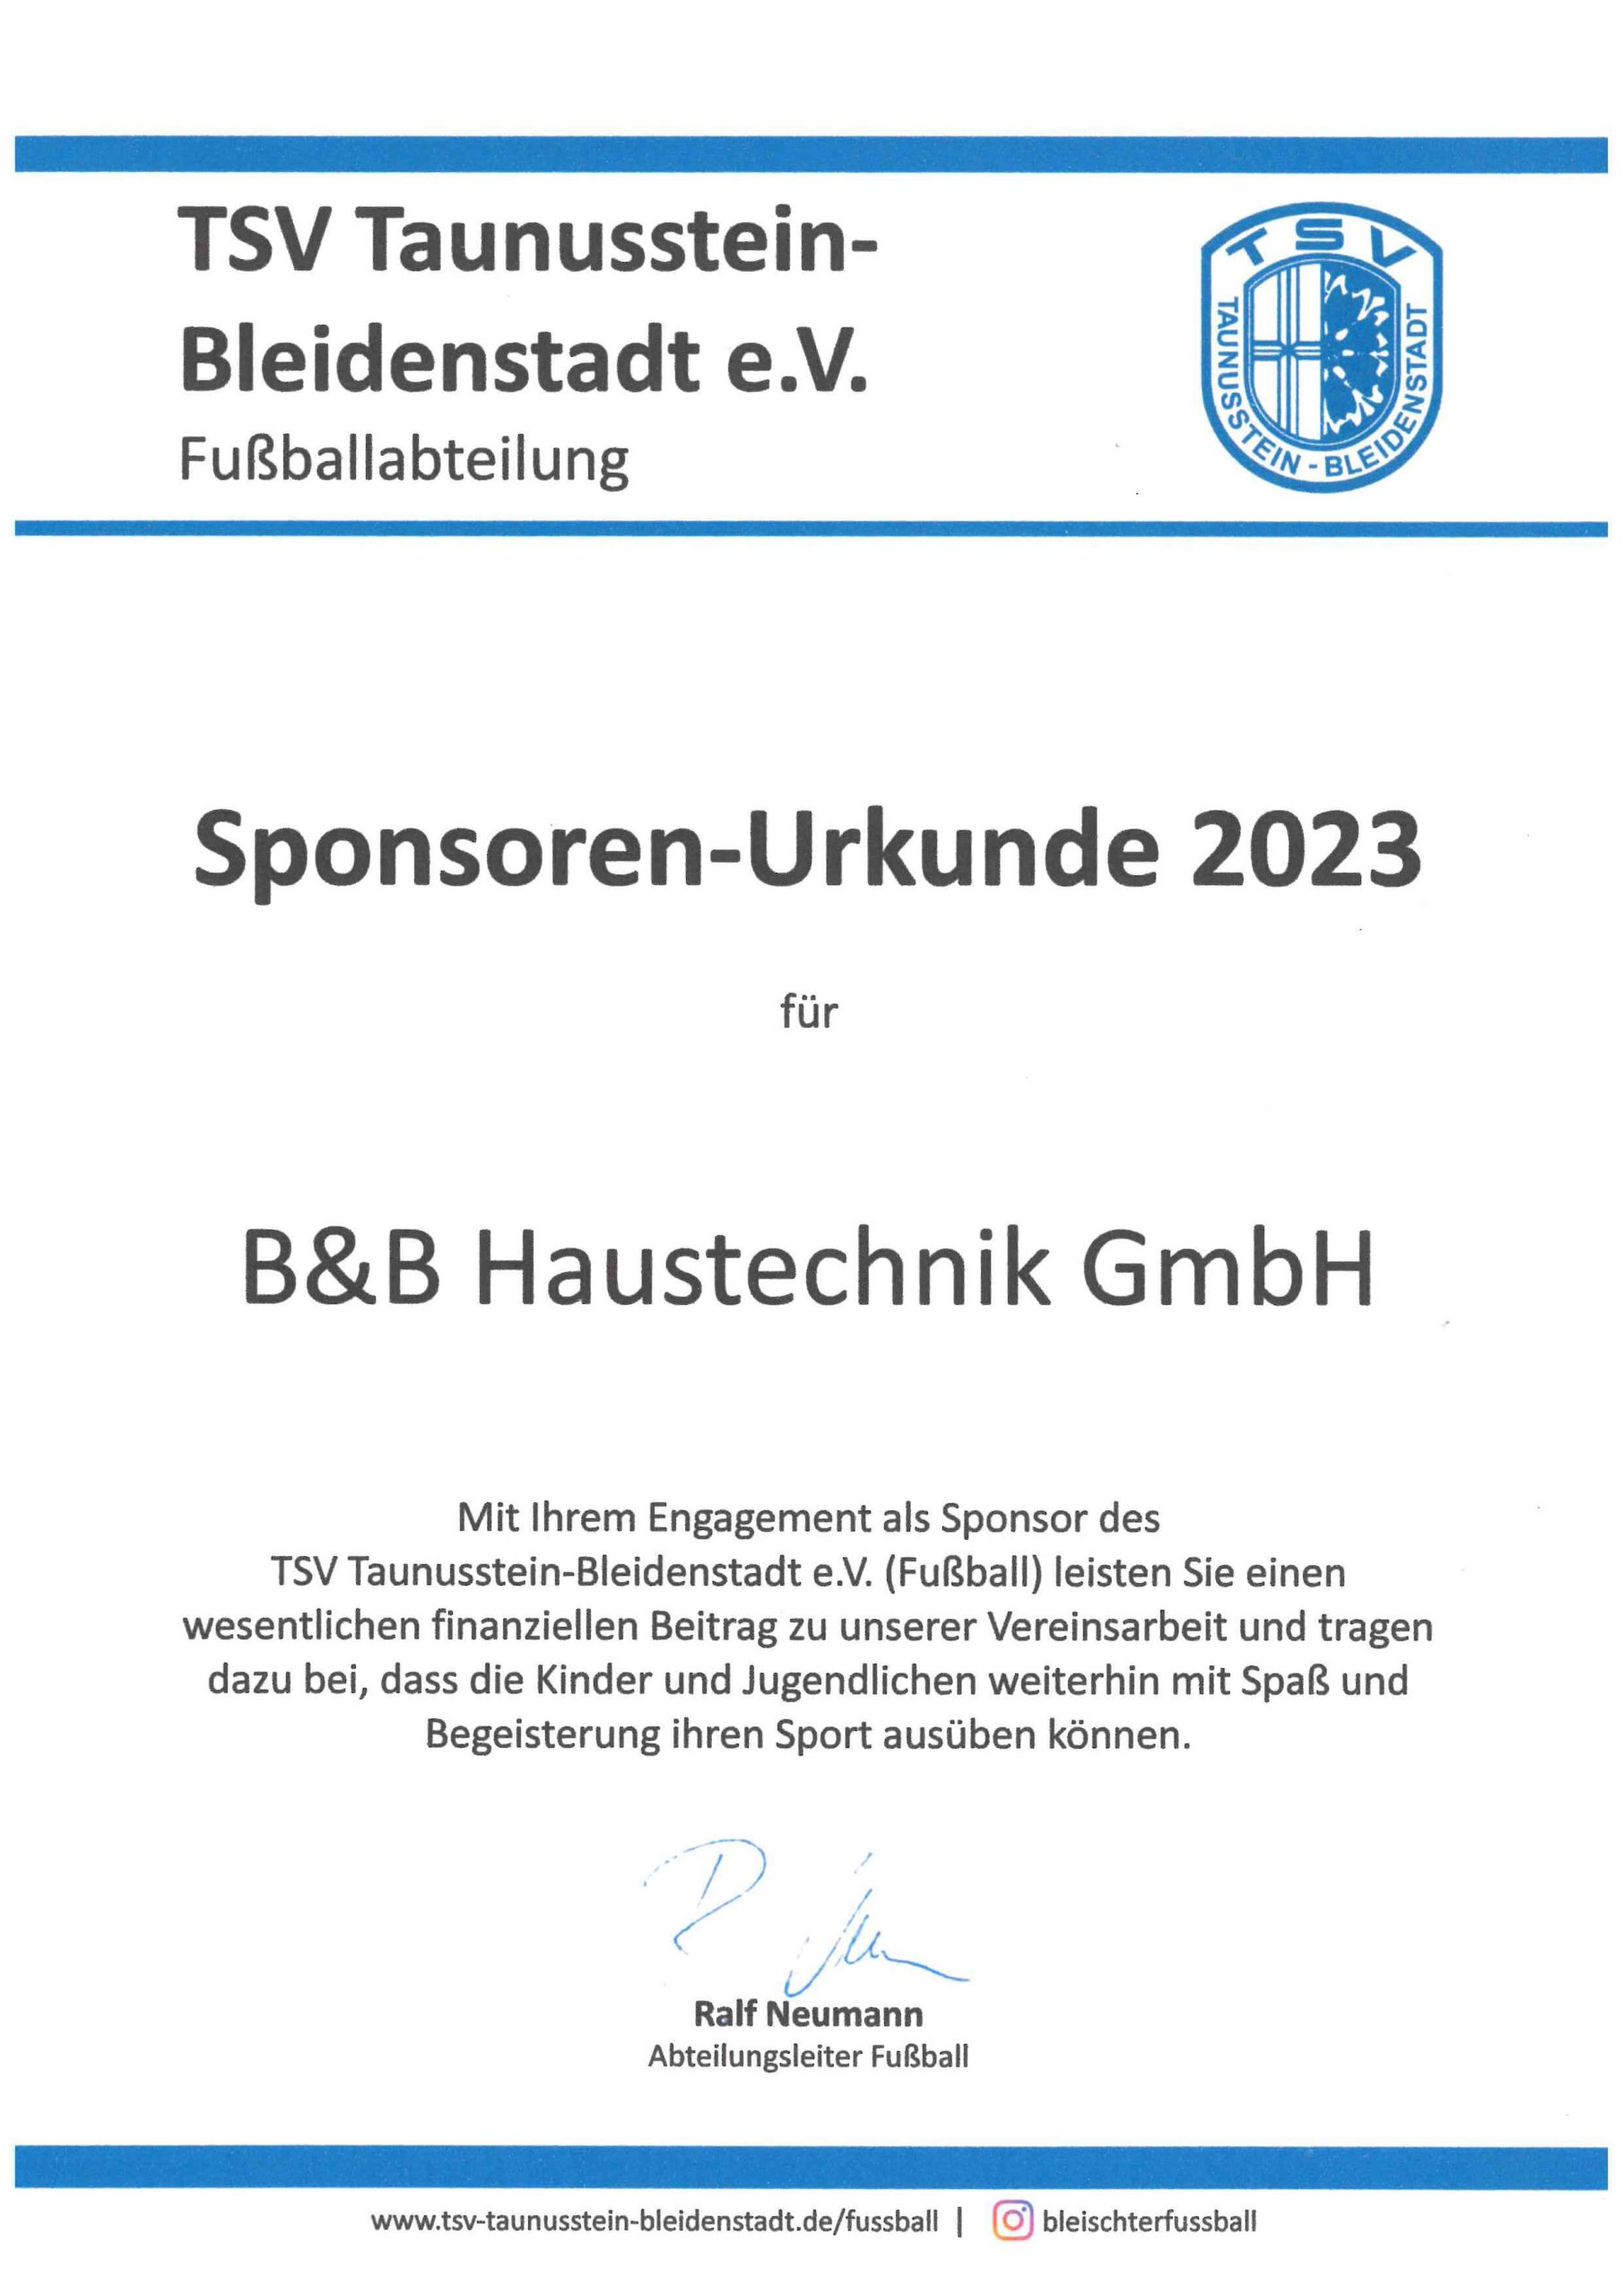 Urkunde Stadionbanner 2023 TSV Taunisstein-Bleidenstadt